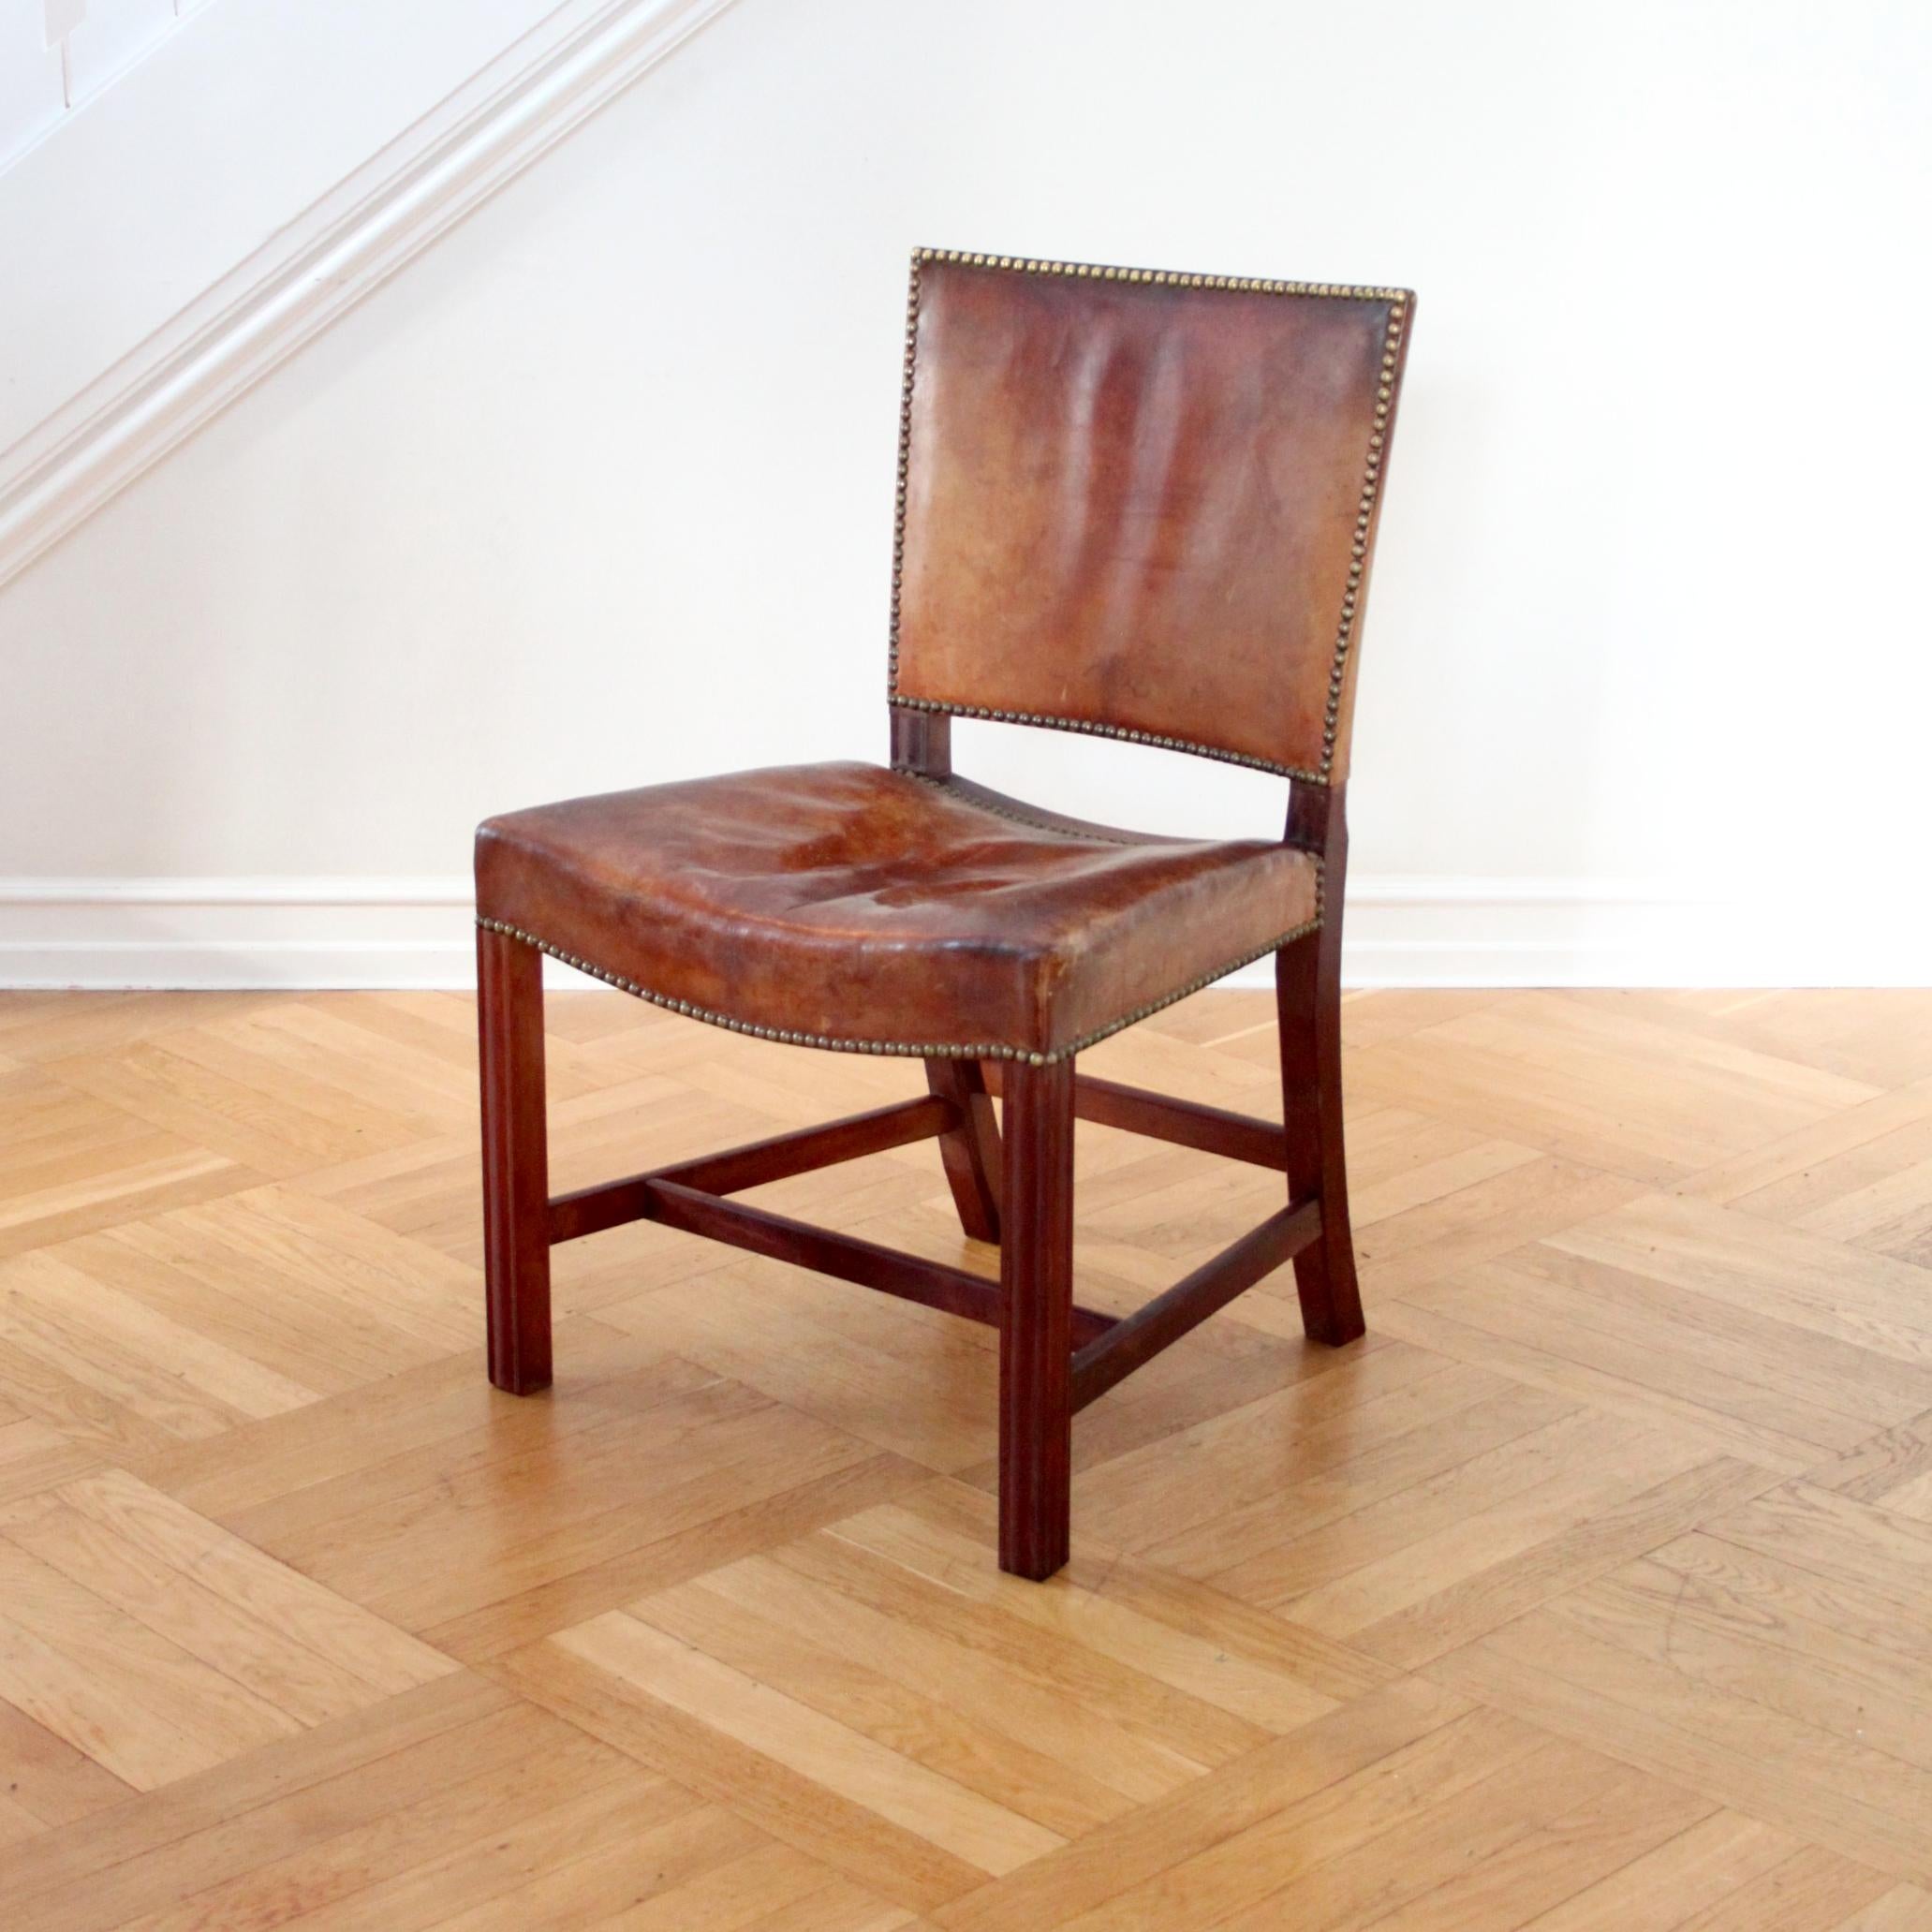 Scandinavian Modern Kaare Klint Red Chair, Rud Rasmussen, Original Niger Leather and Mahogany frame For Sale